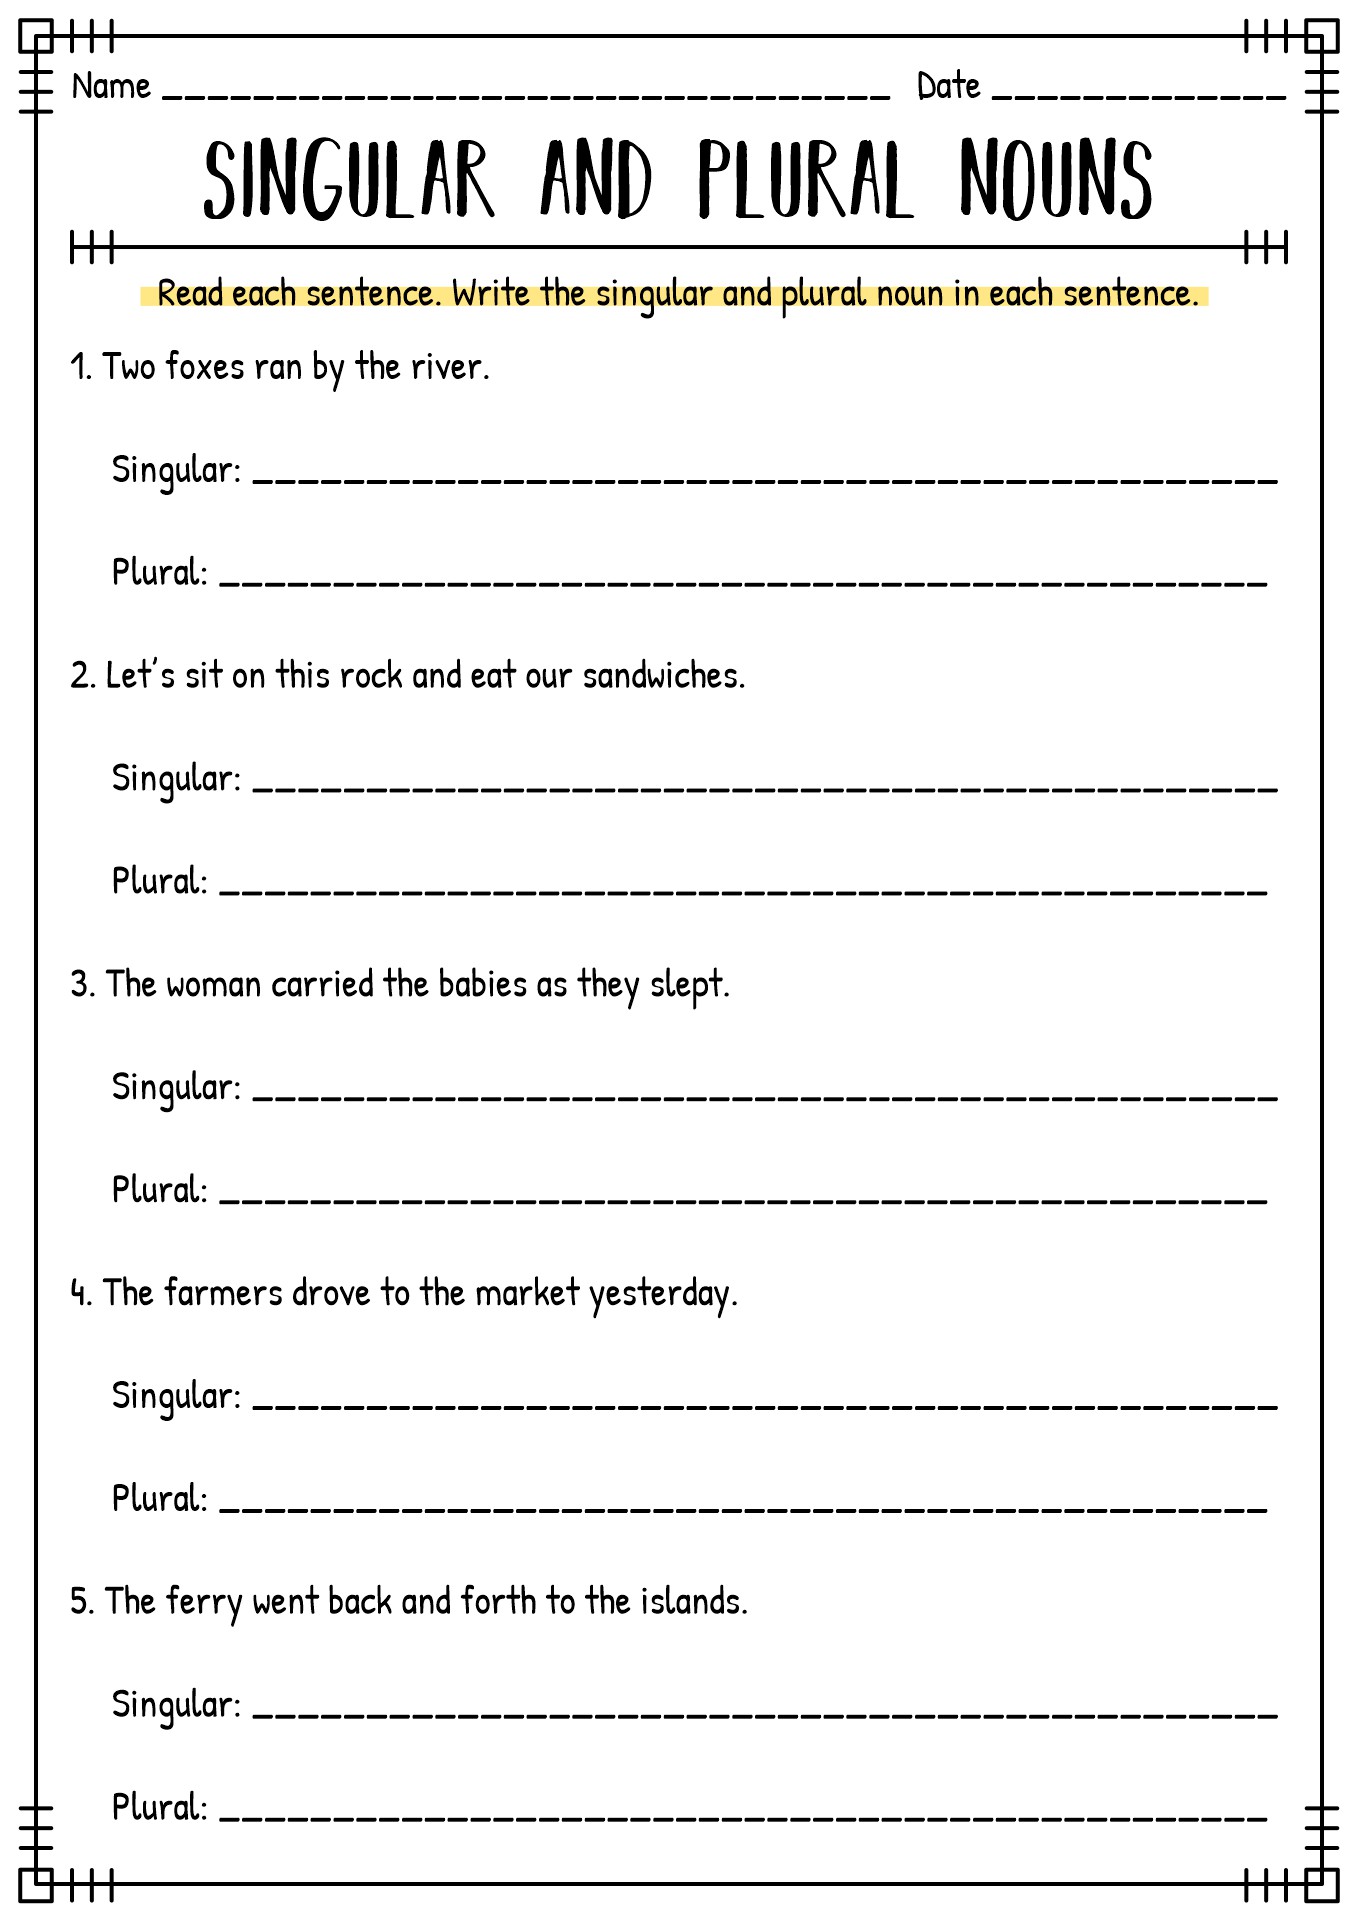 Singular and Plural Nouns Worksheets Image